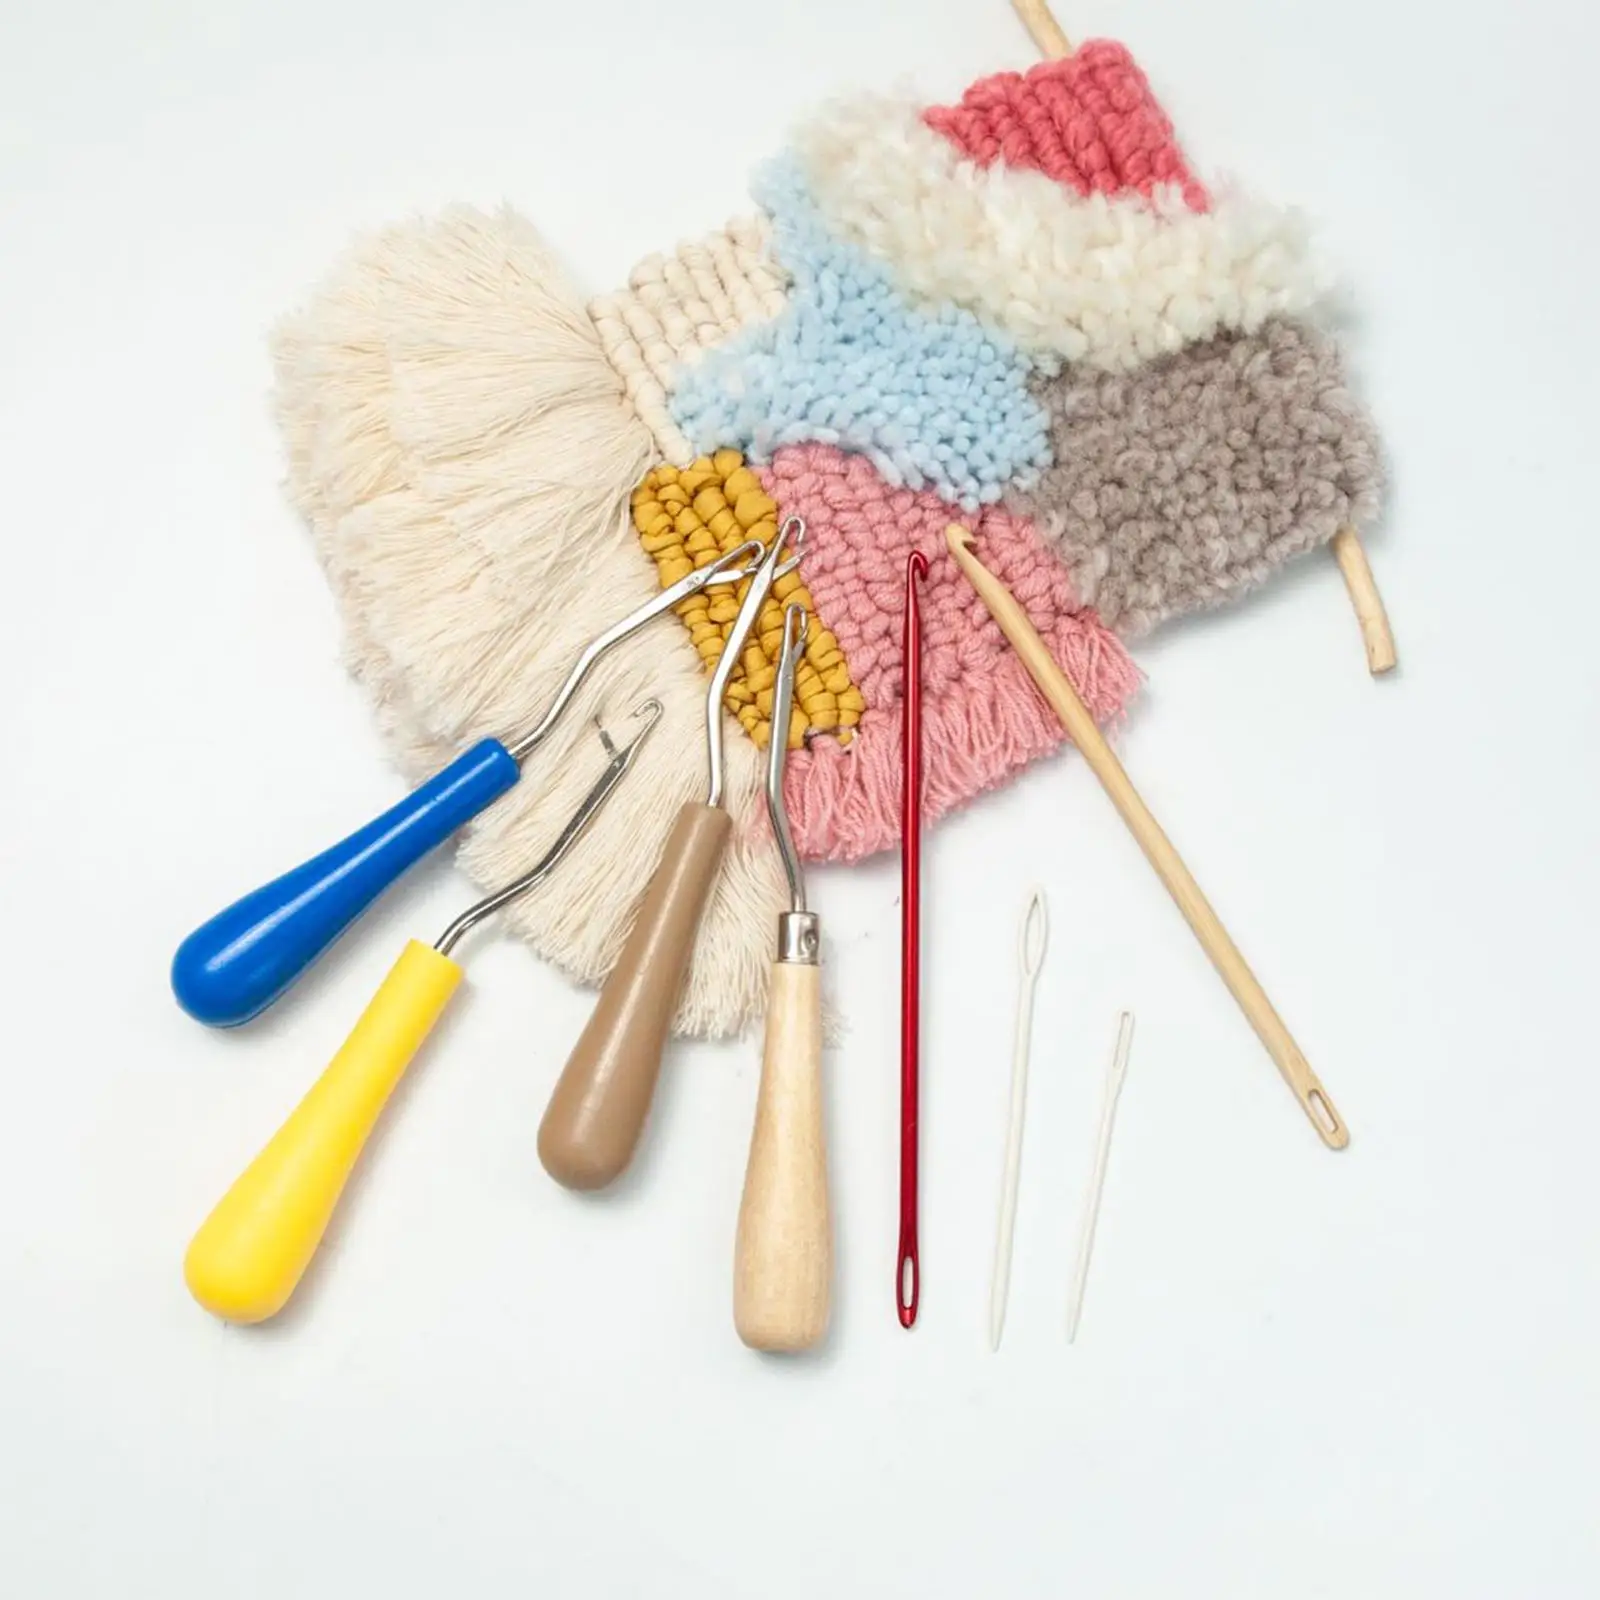 Latch Hook Crochet Pin Wooden Bent Supplies Weaving Needles for Embroidery